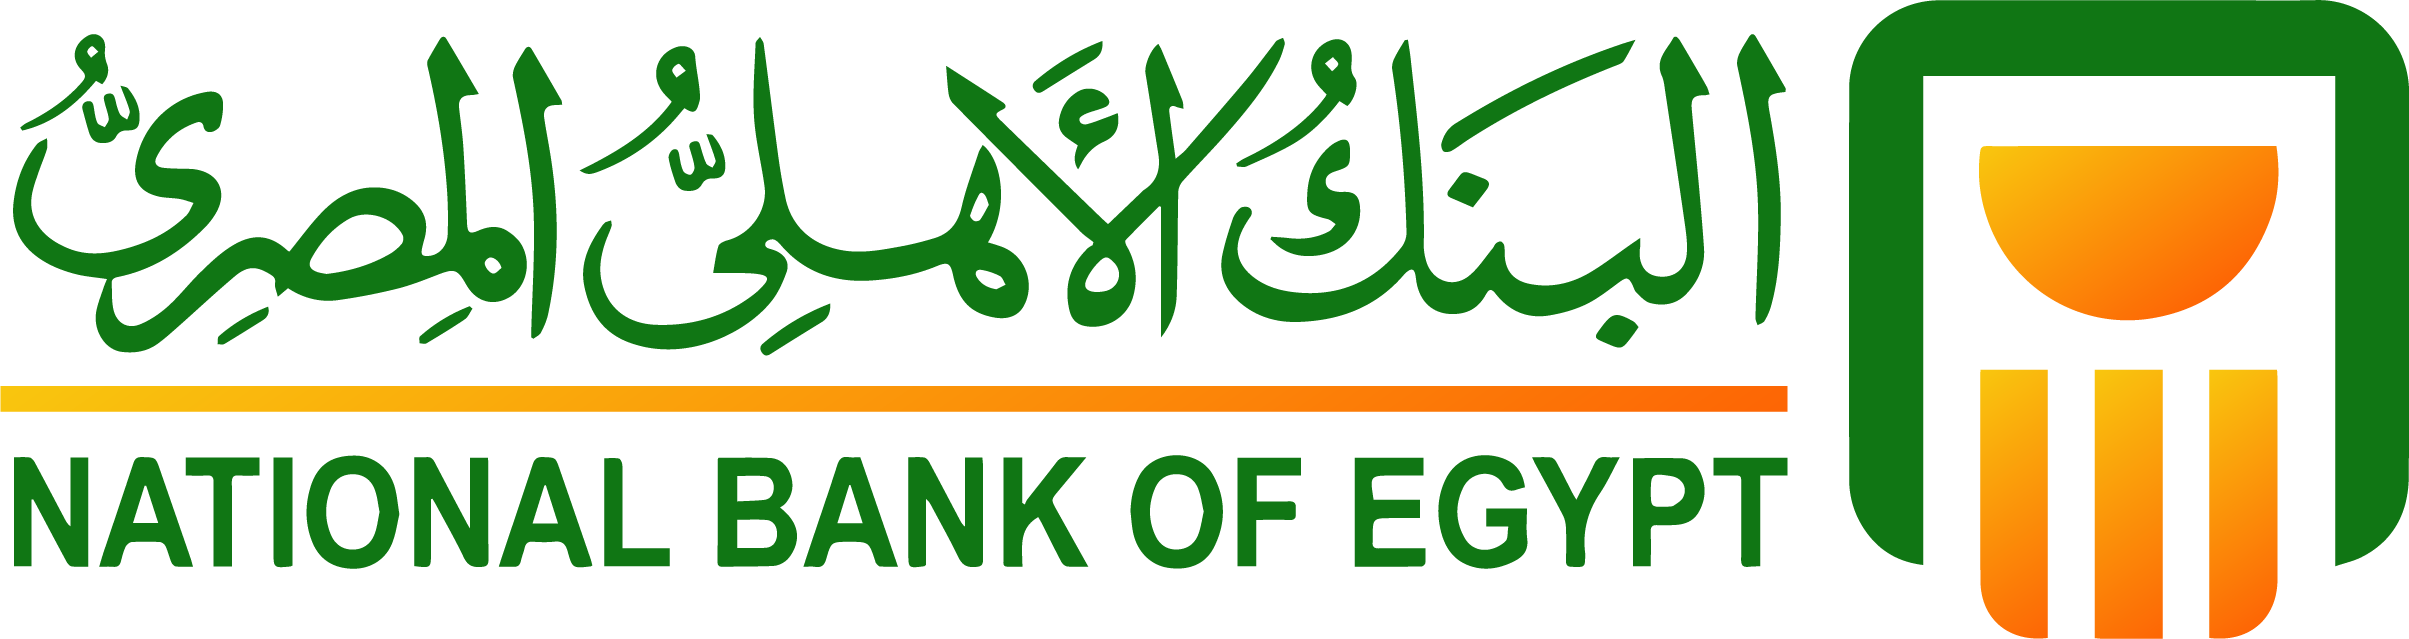 29 National Bank Of Egypt